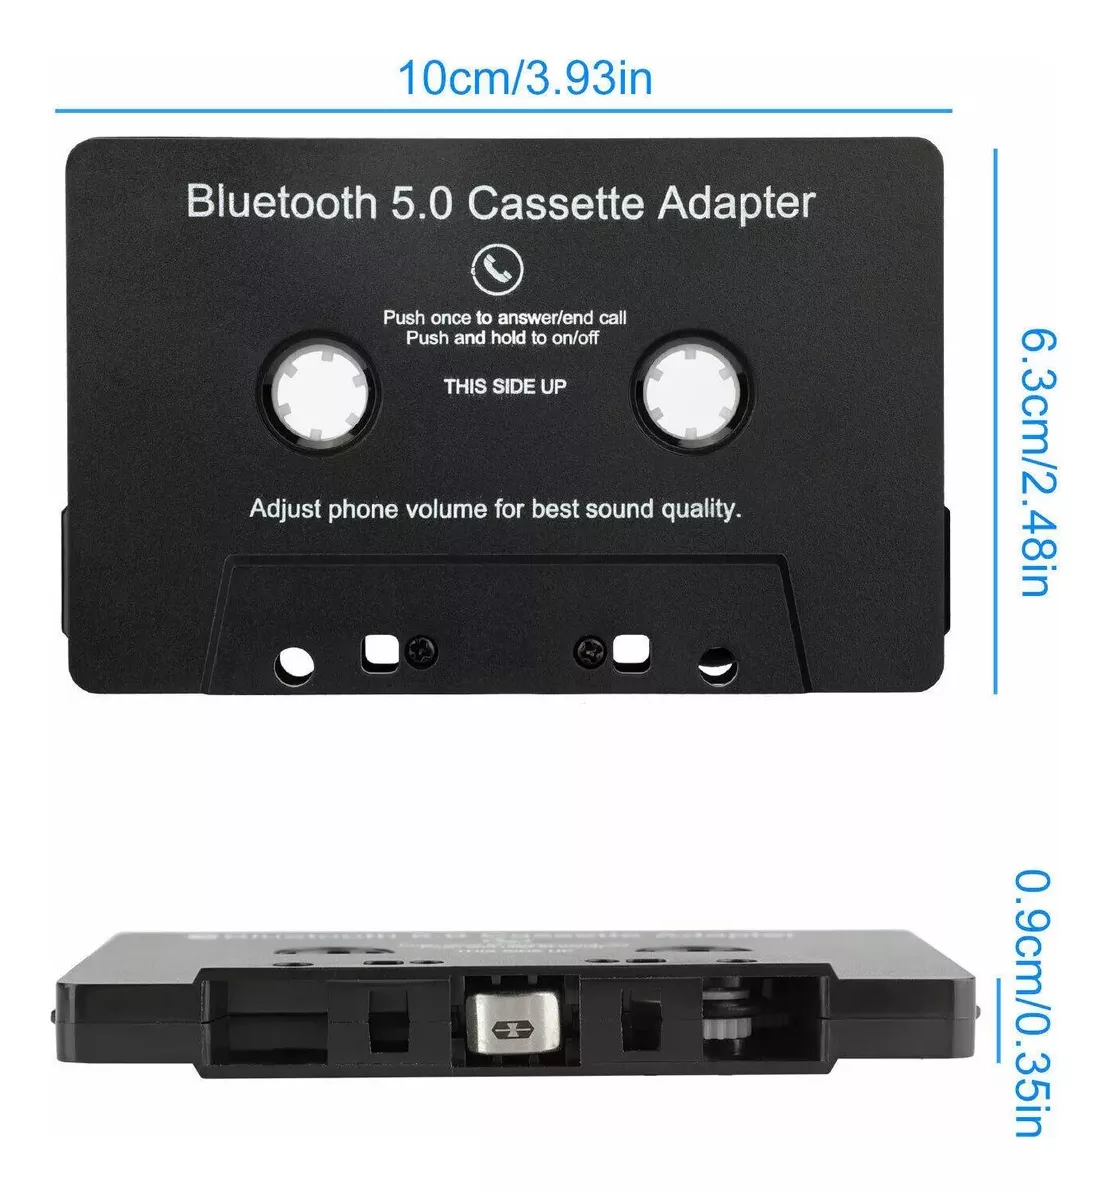 Segunda imagen para búsqueda de cassette auxiliar